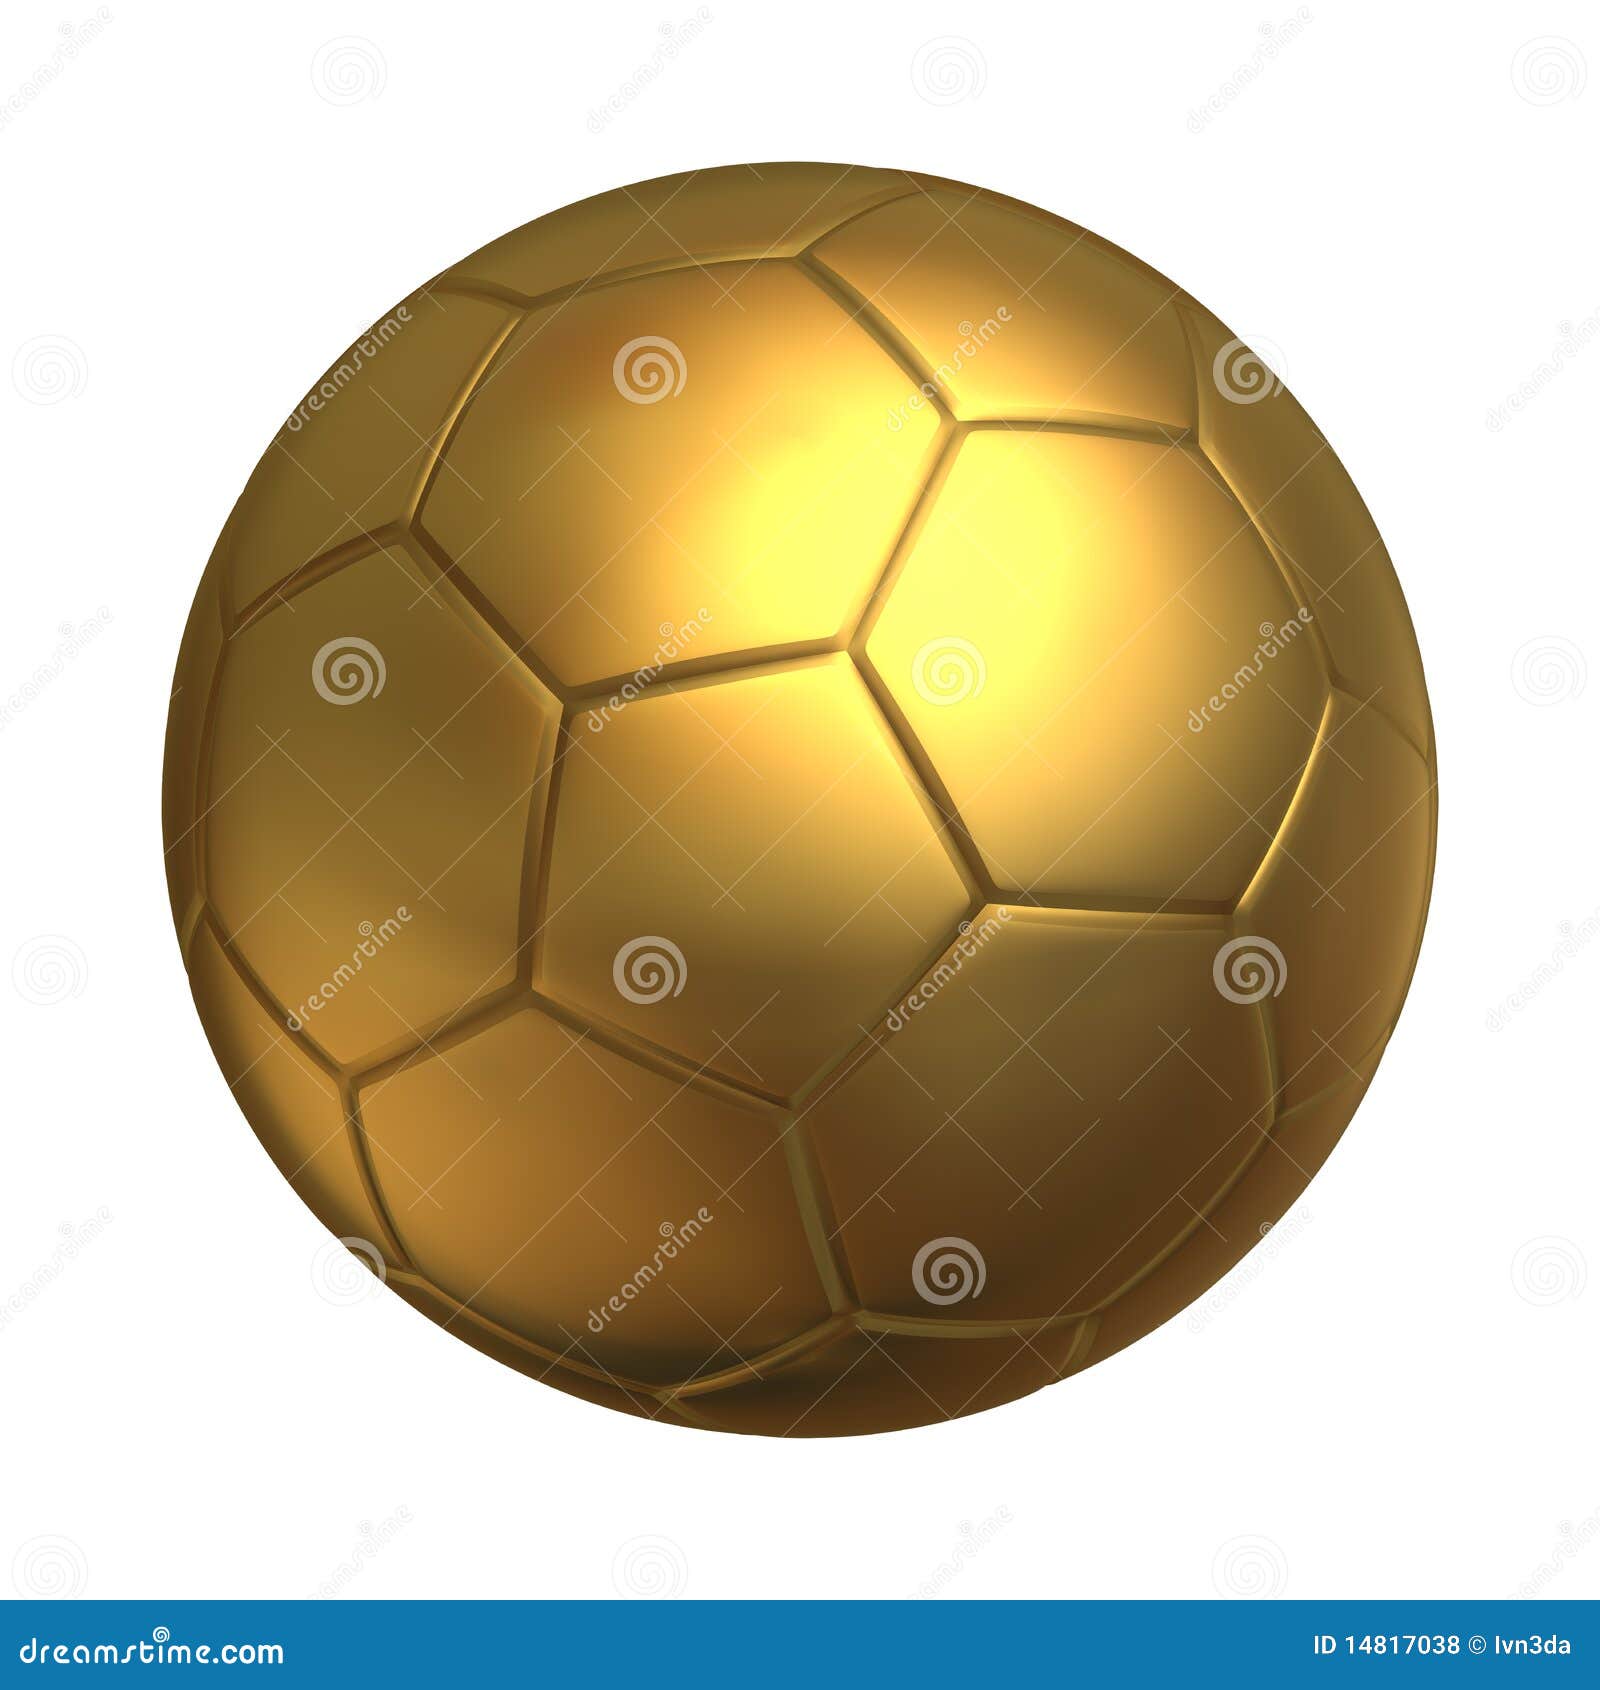 Golden soccer ball stock illustration. Illustration of pattern - 14817038